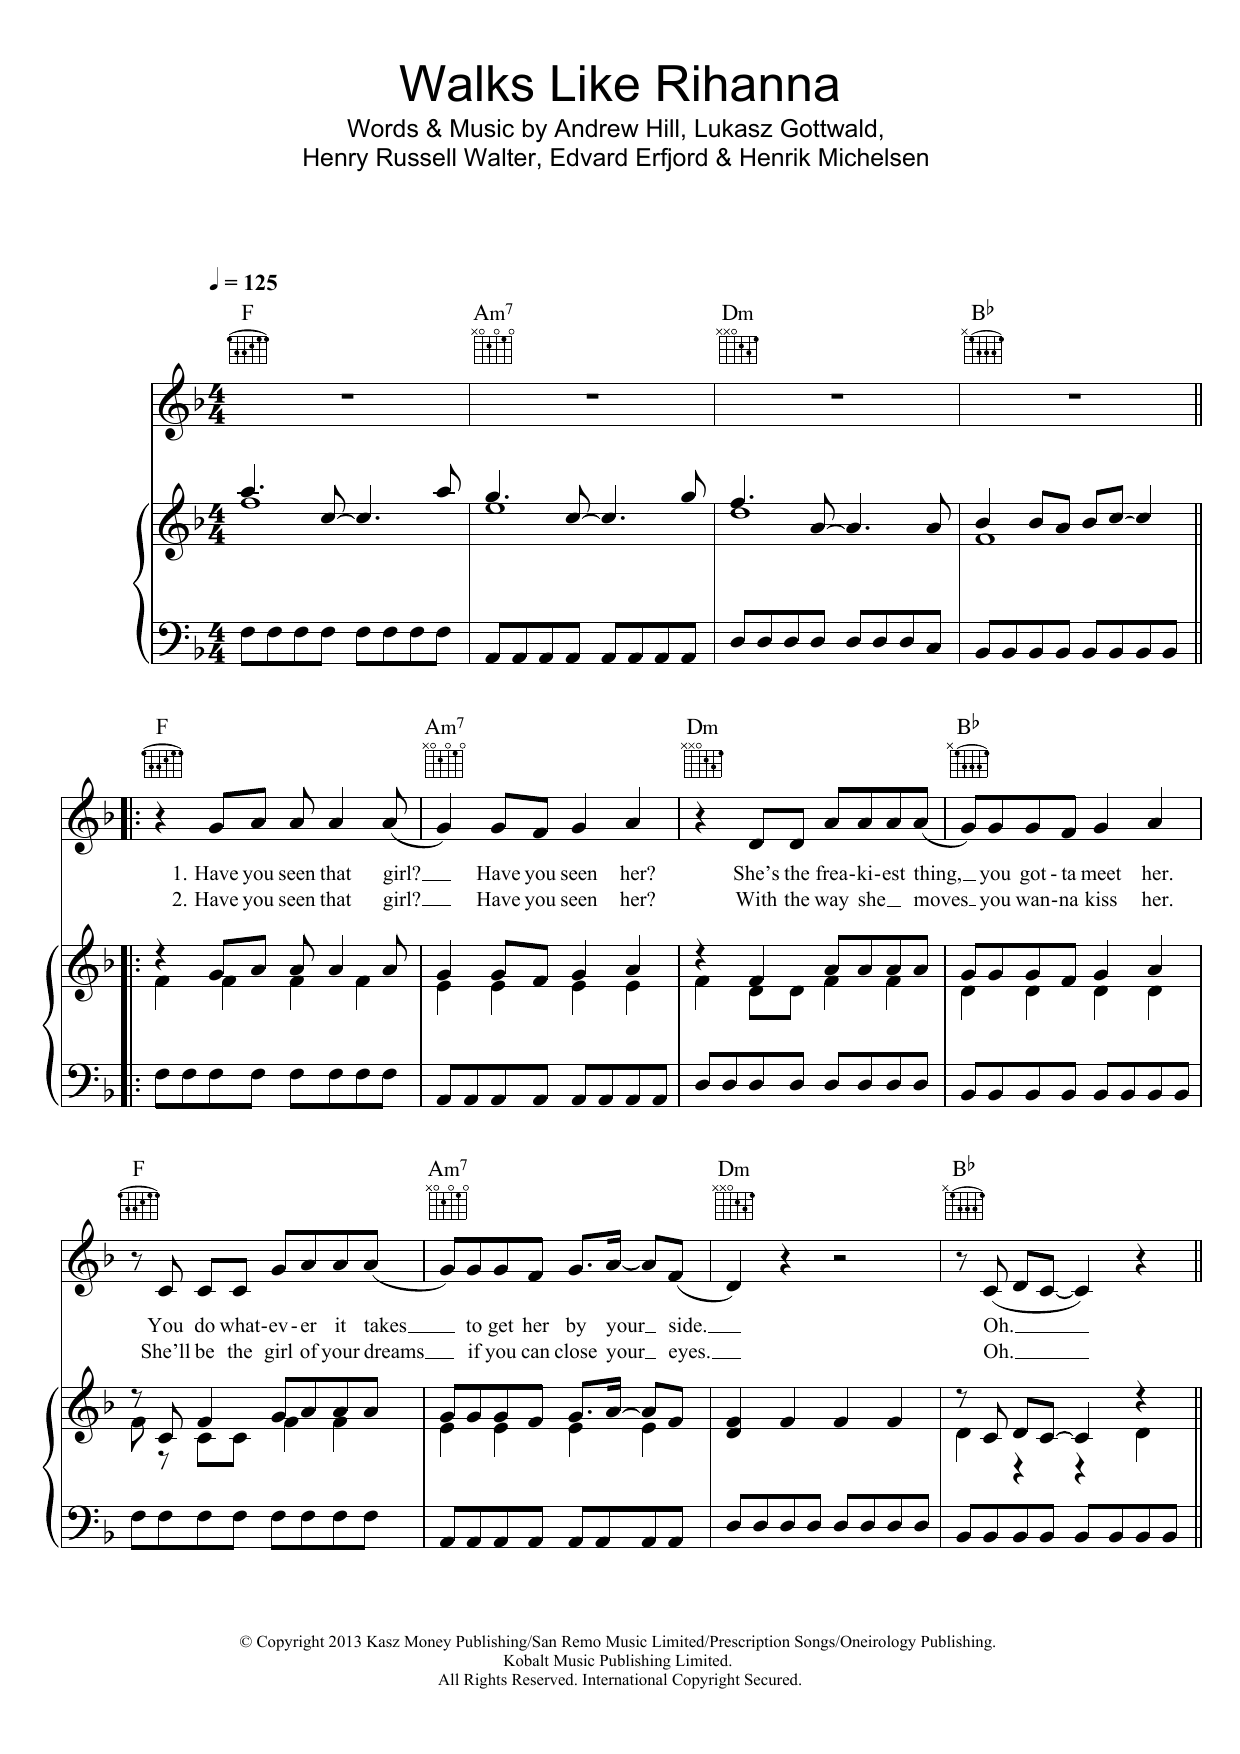 The Wanted Walks Like Rihanna Sheet Music Notes & Chords for Violin - Download or Print PDF